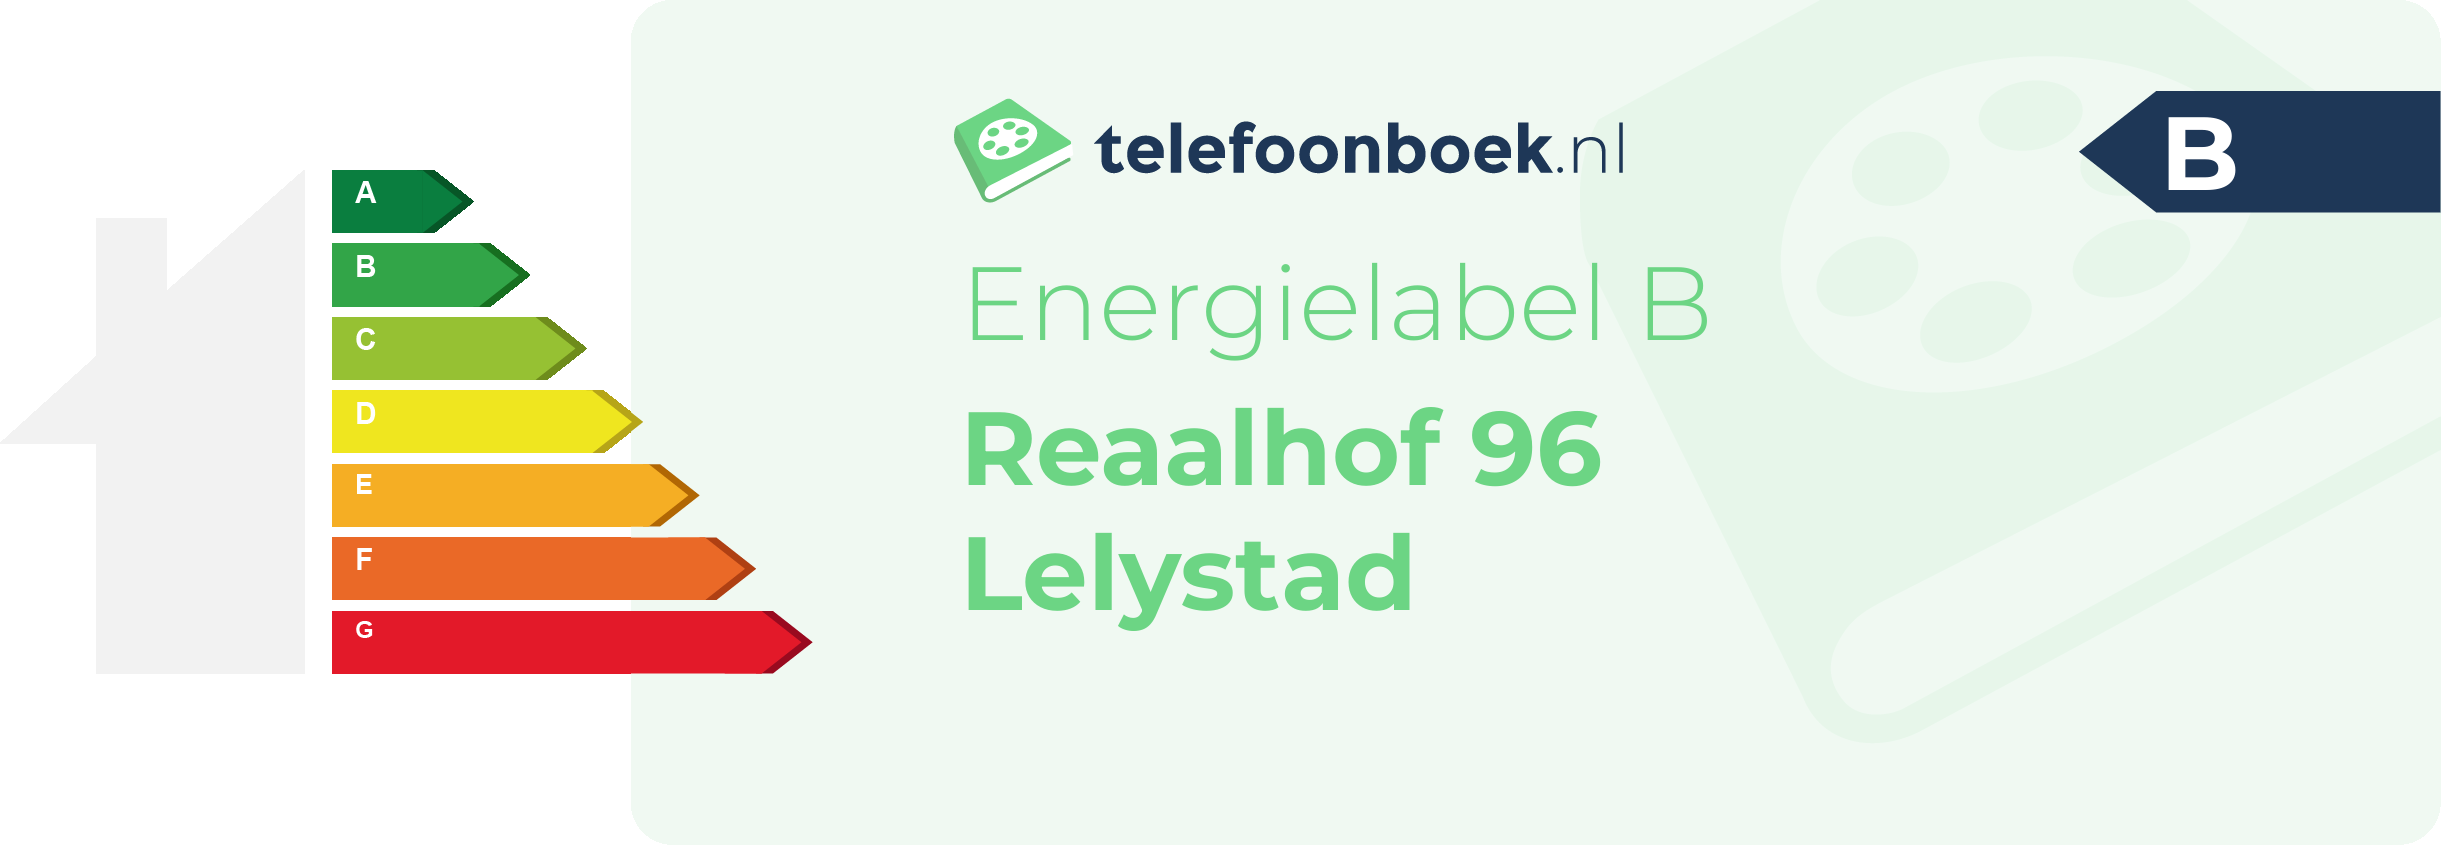 Energielabel Reaalhof 96 Lelystad